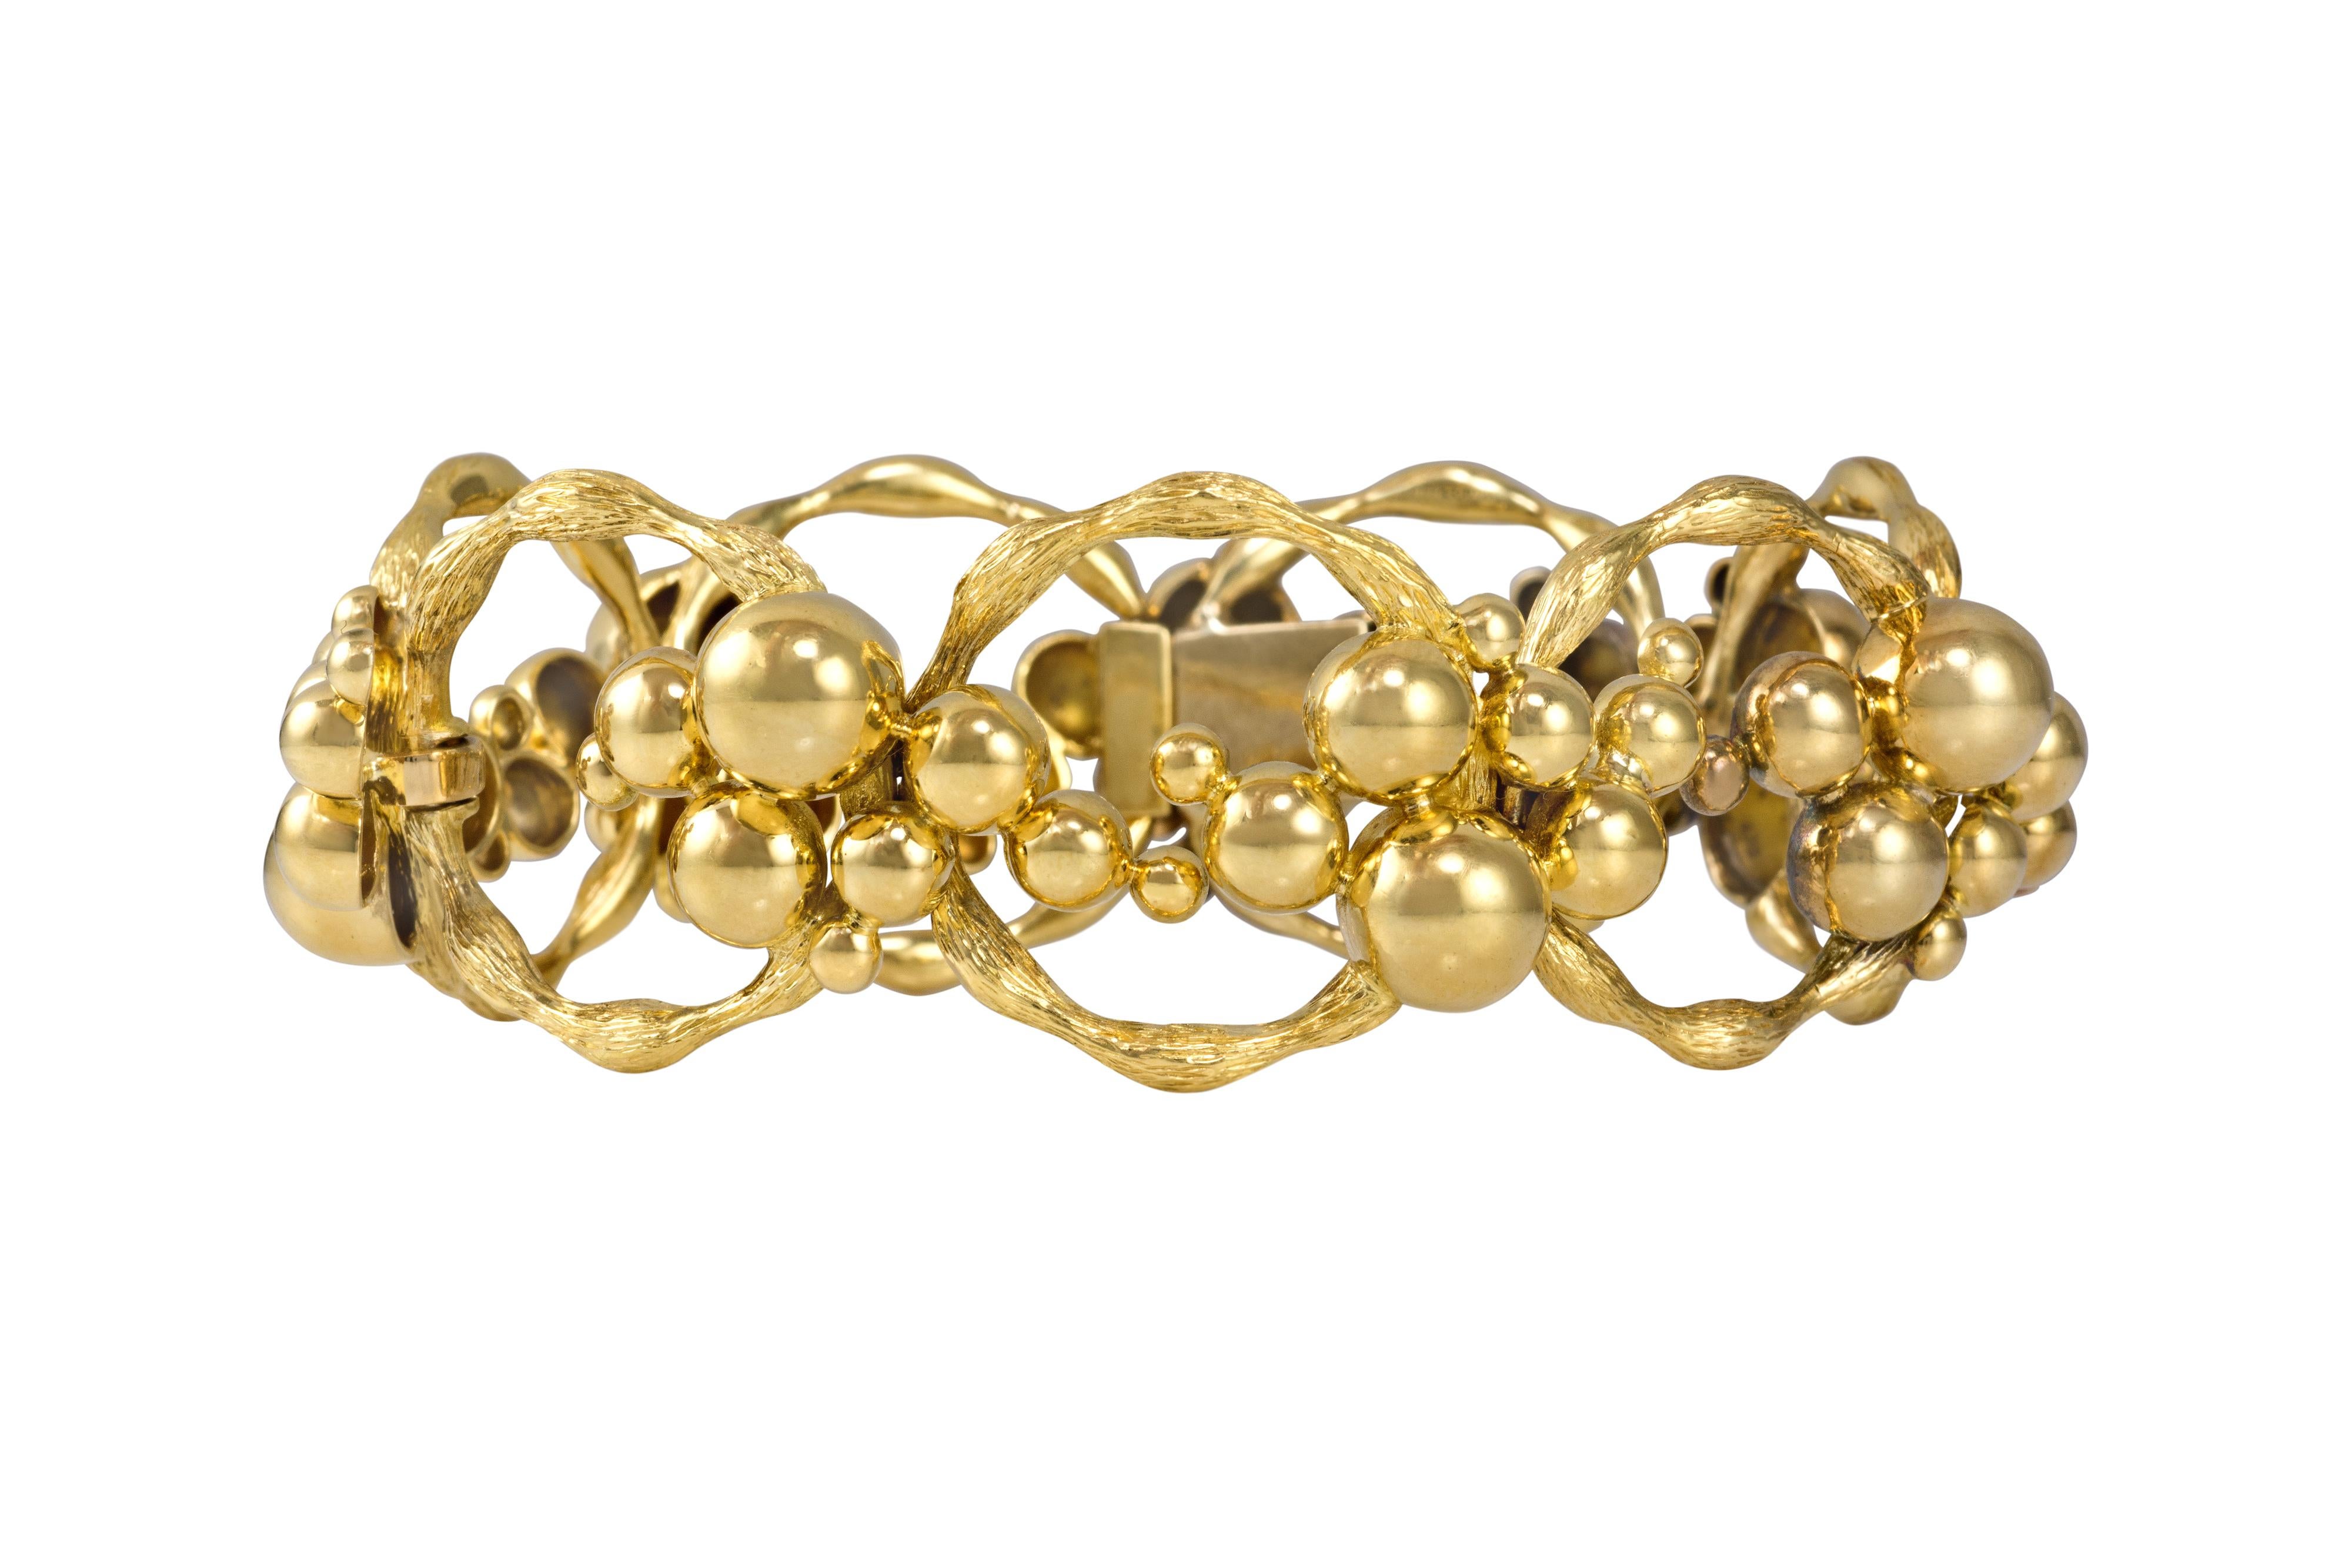 A textured and beaded, 18 karat gold, circular link bracelet, 1970s. 

The bracelet is 7.5